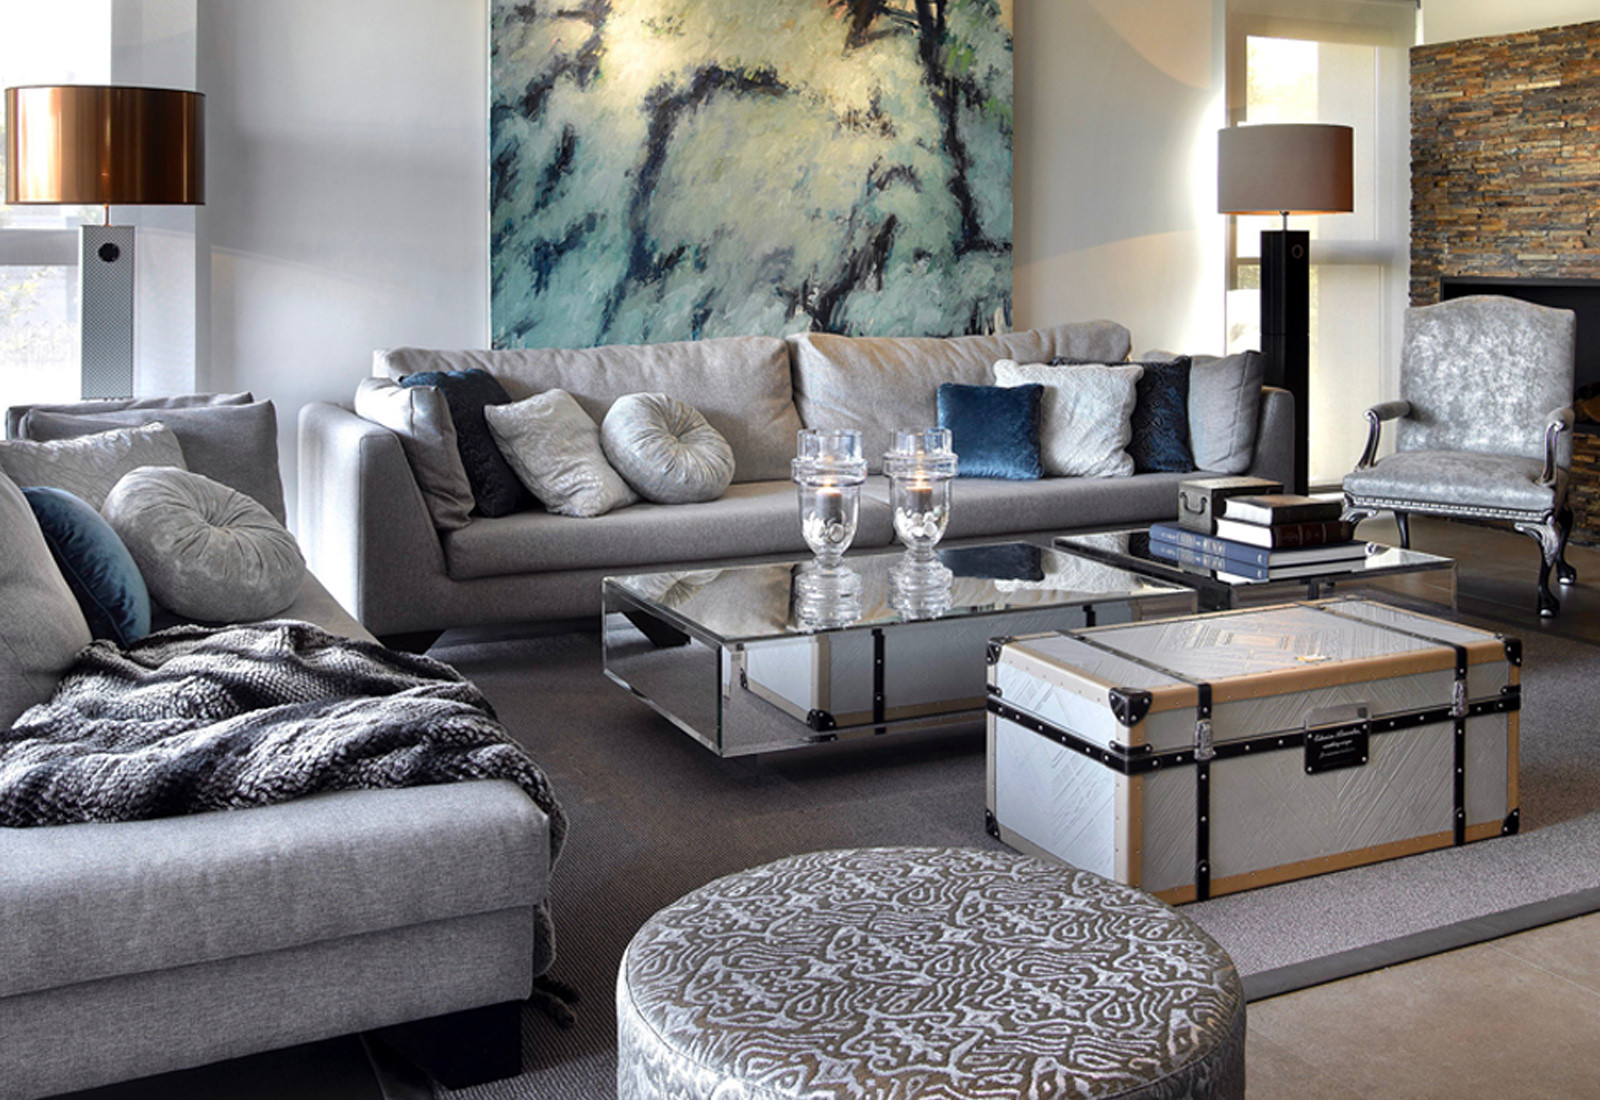 Modern Living Room Tables
 Luxury Living Room Furniture Sets